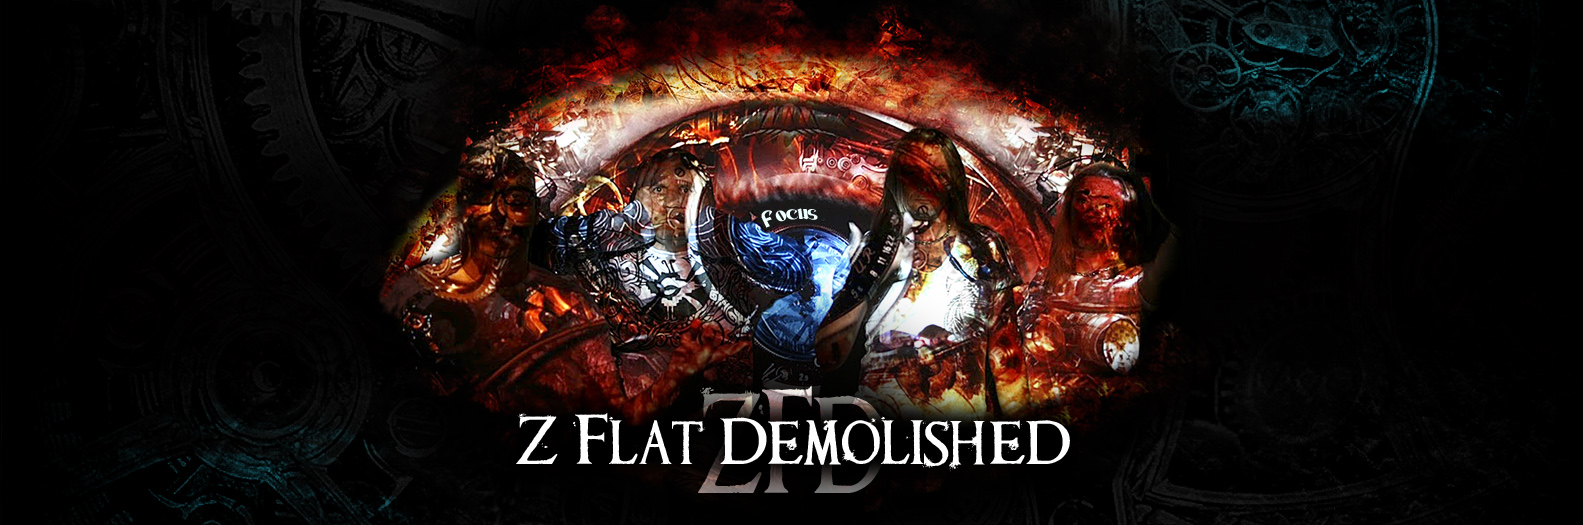 Z Flat Demolished